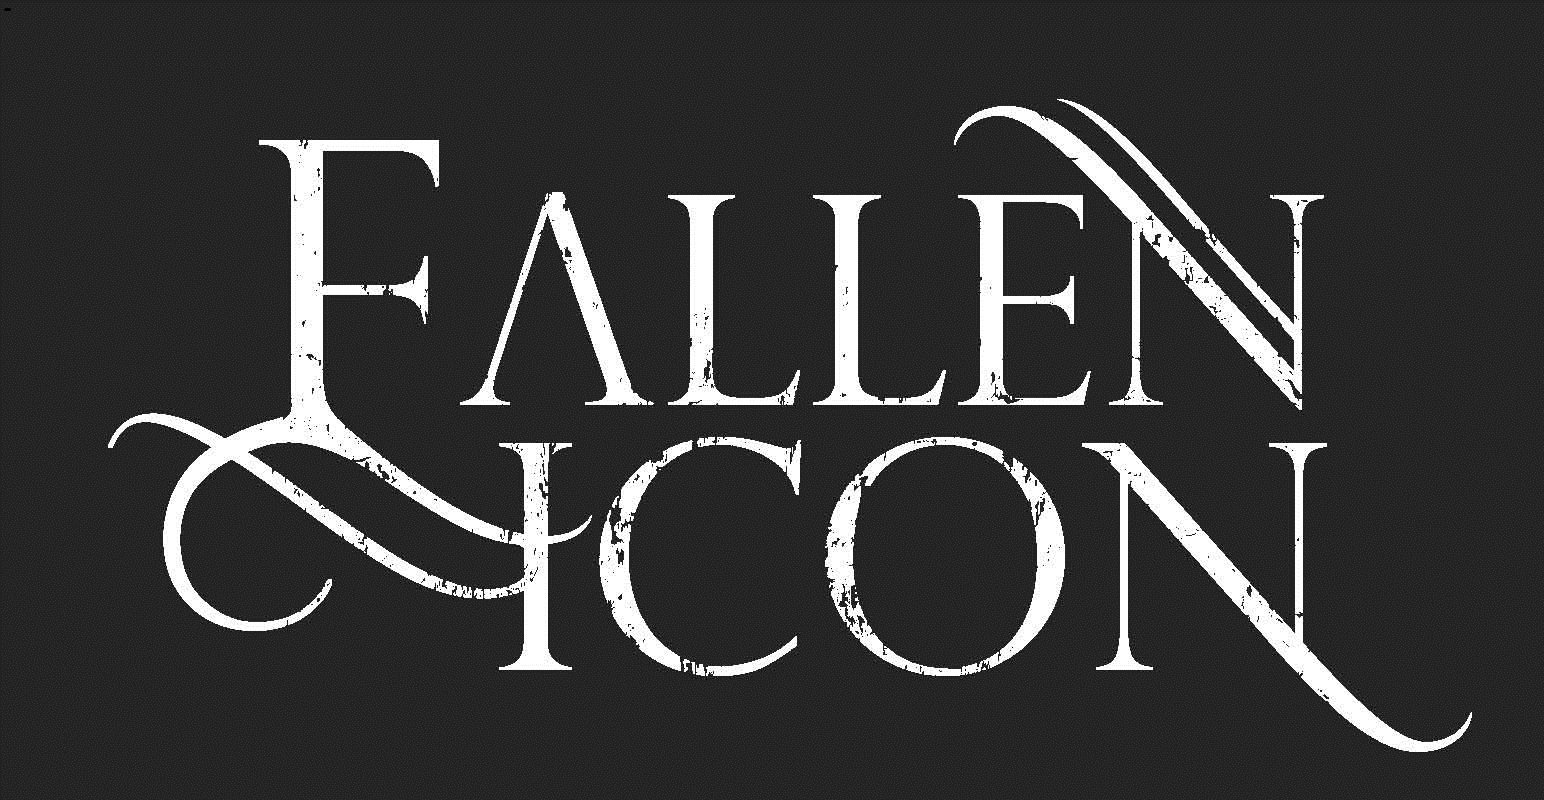 Fallen Icon